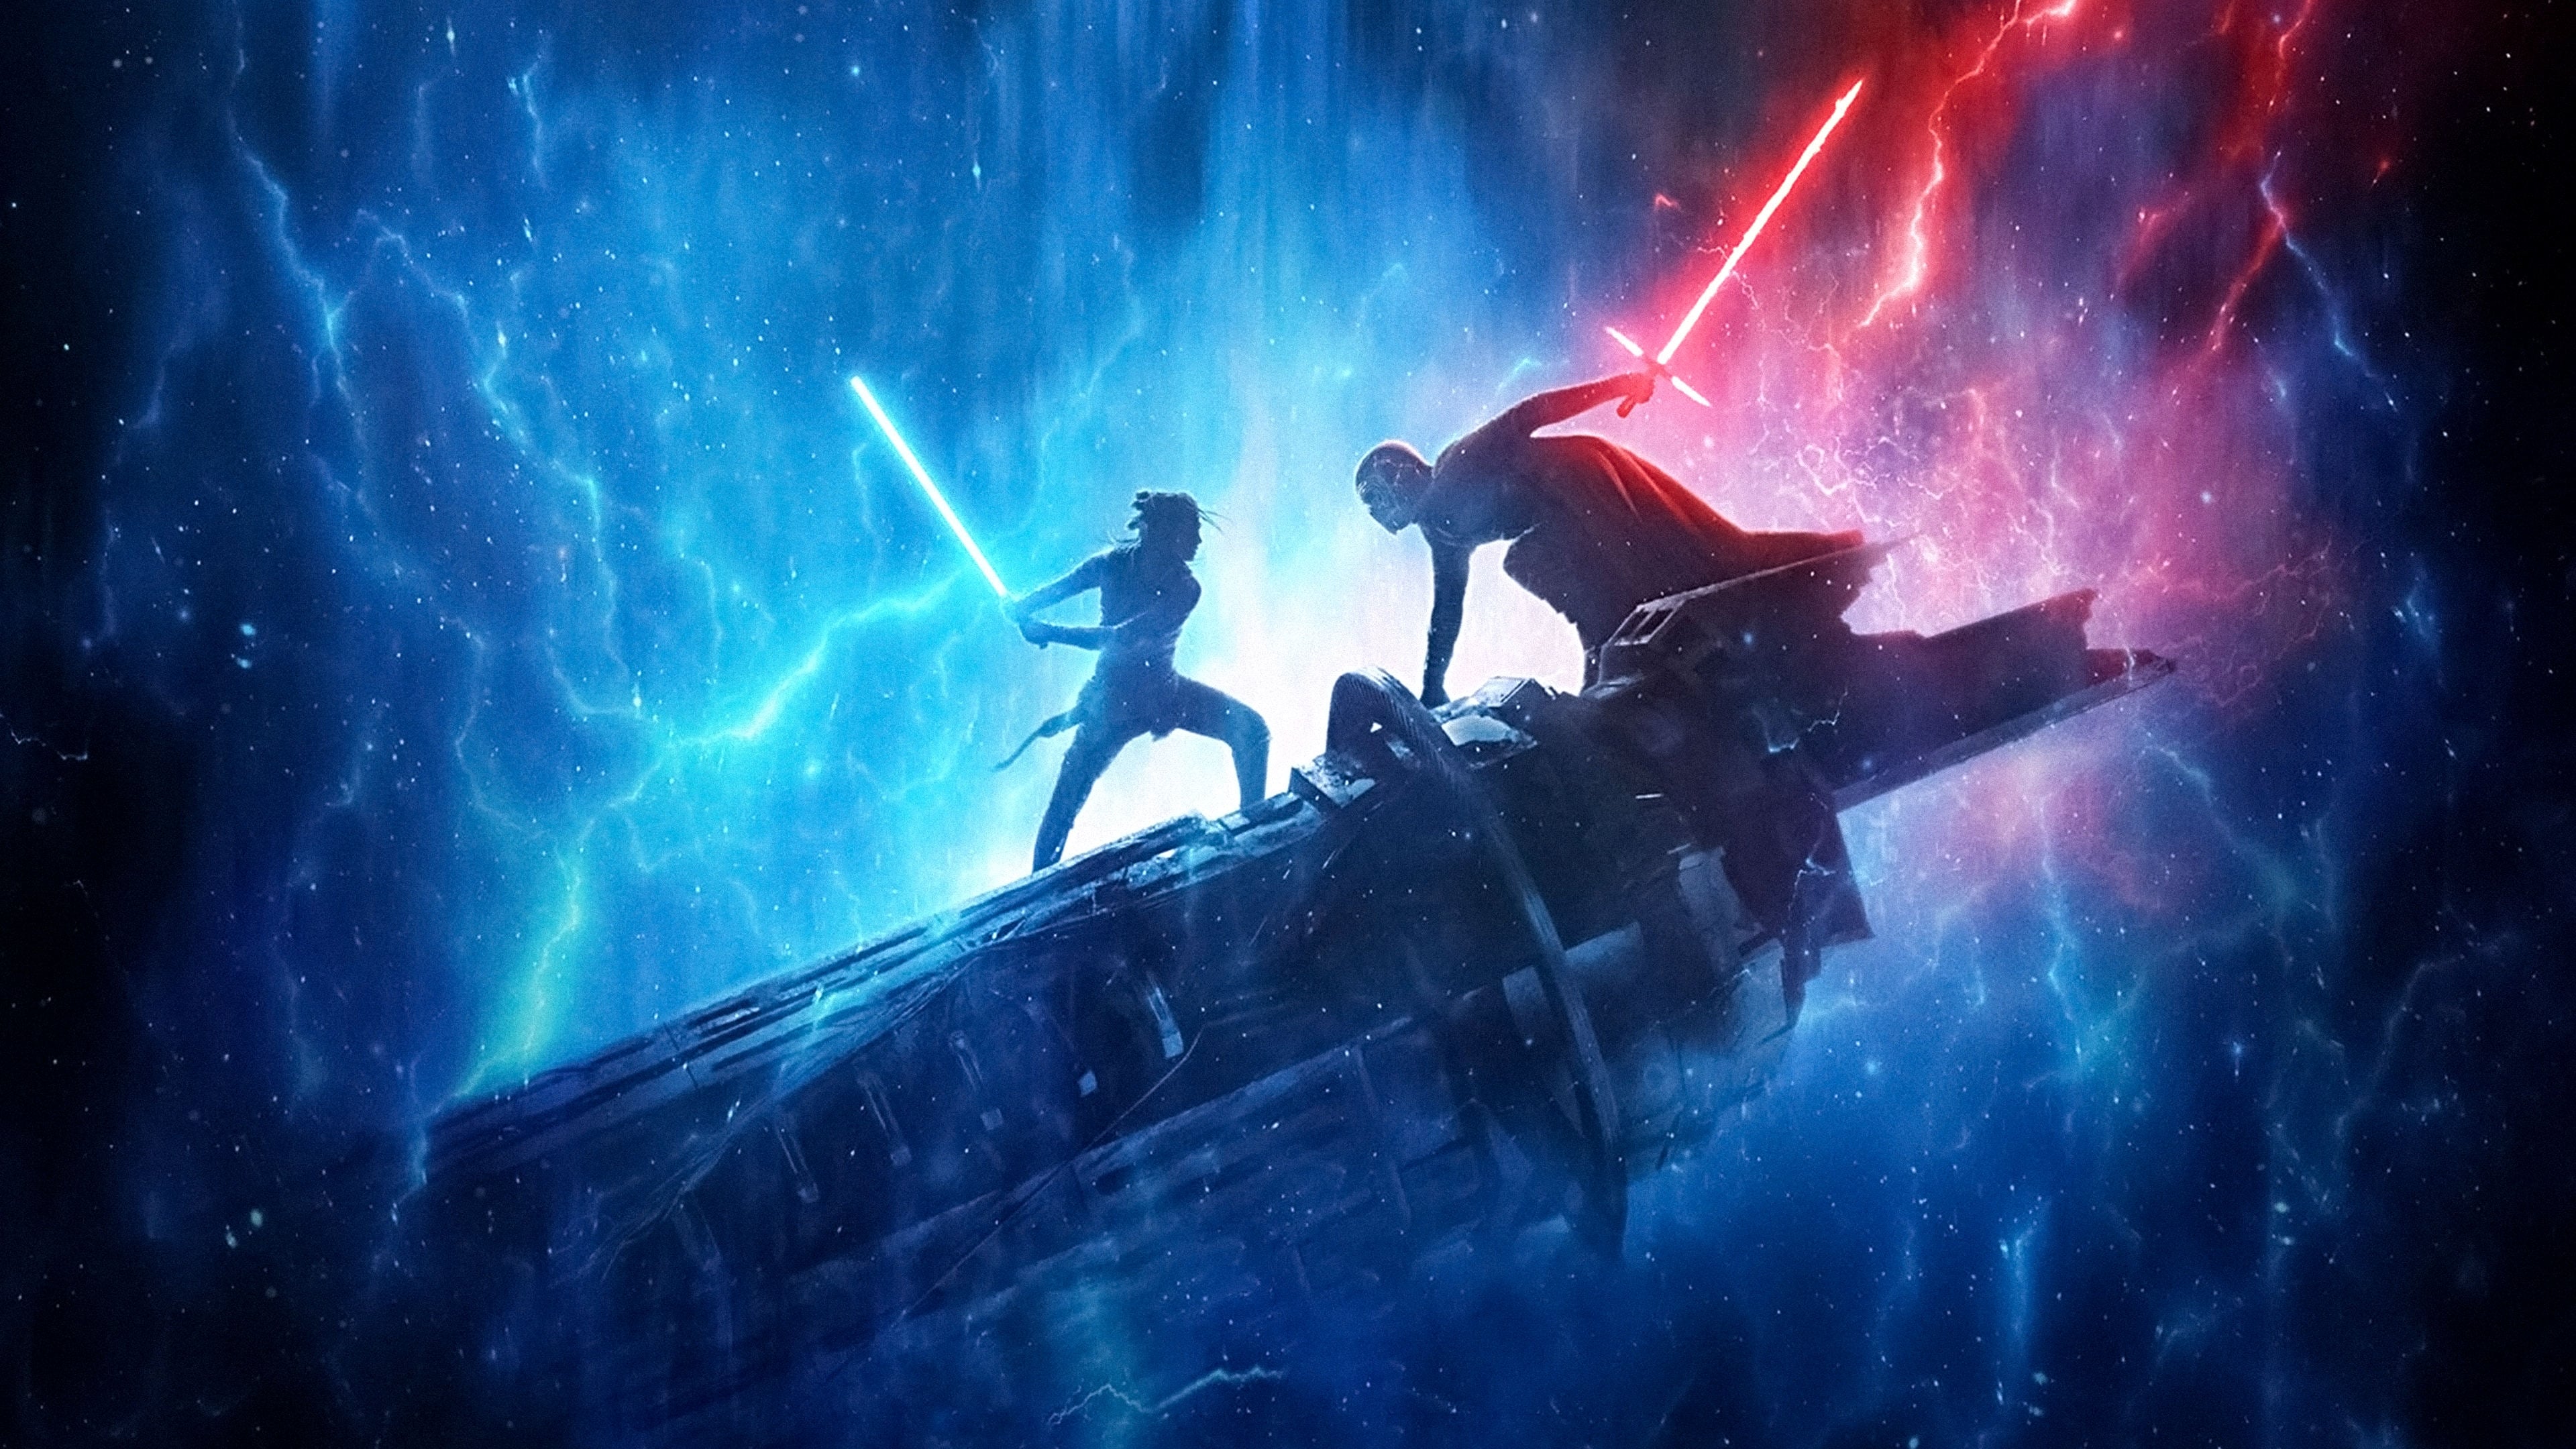 Image du film Star Wars Episode IX : l'ascension de Skywalker jozrelazfxtmx2i4udghootdfssjpg